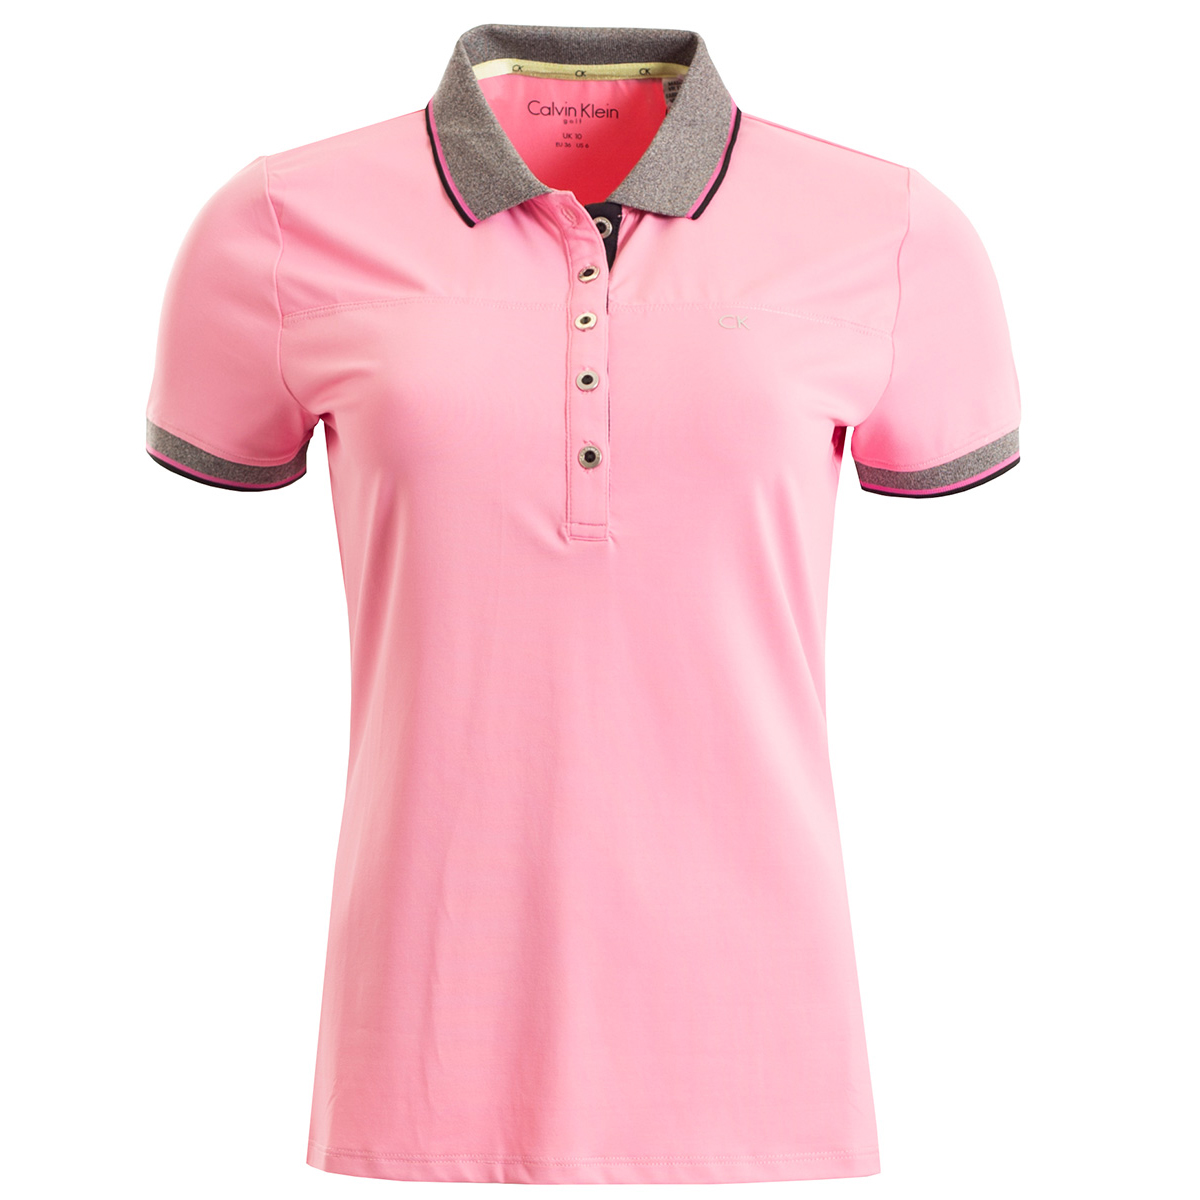 calvin klein golf women's clothing